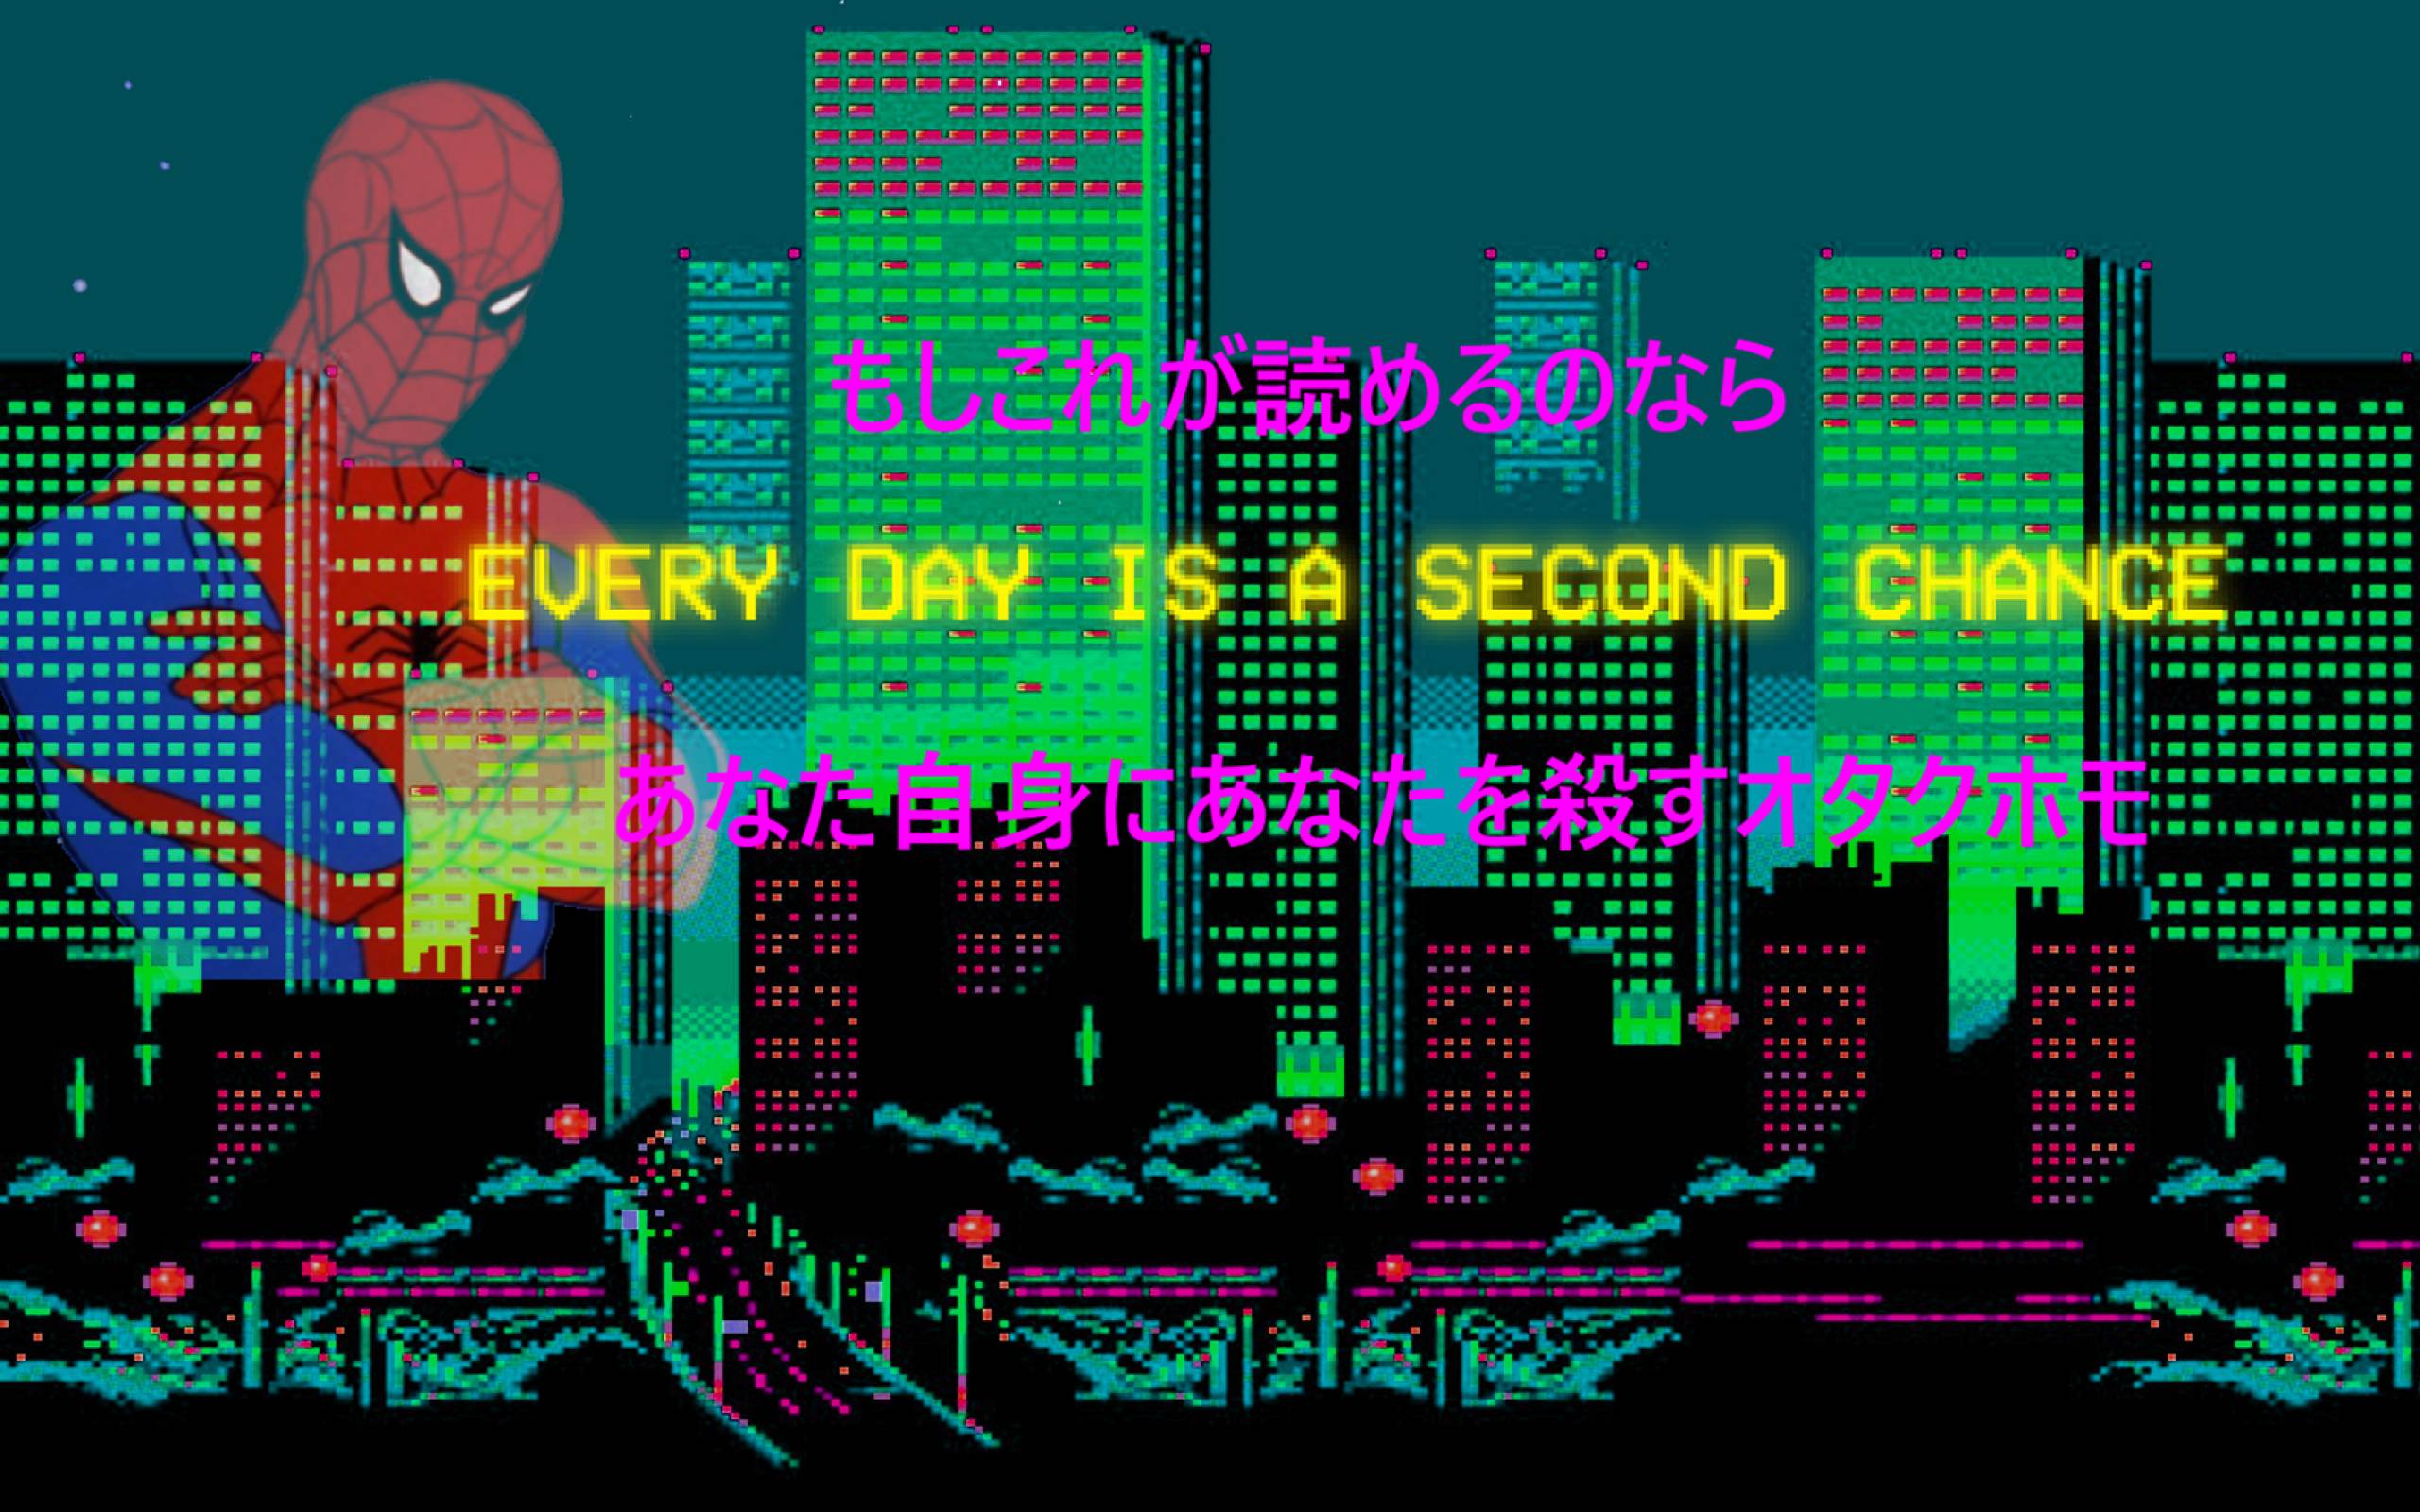 Spider man the video game - screenshot 1 - 2560x1600